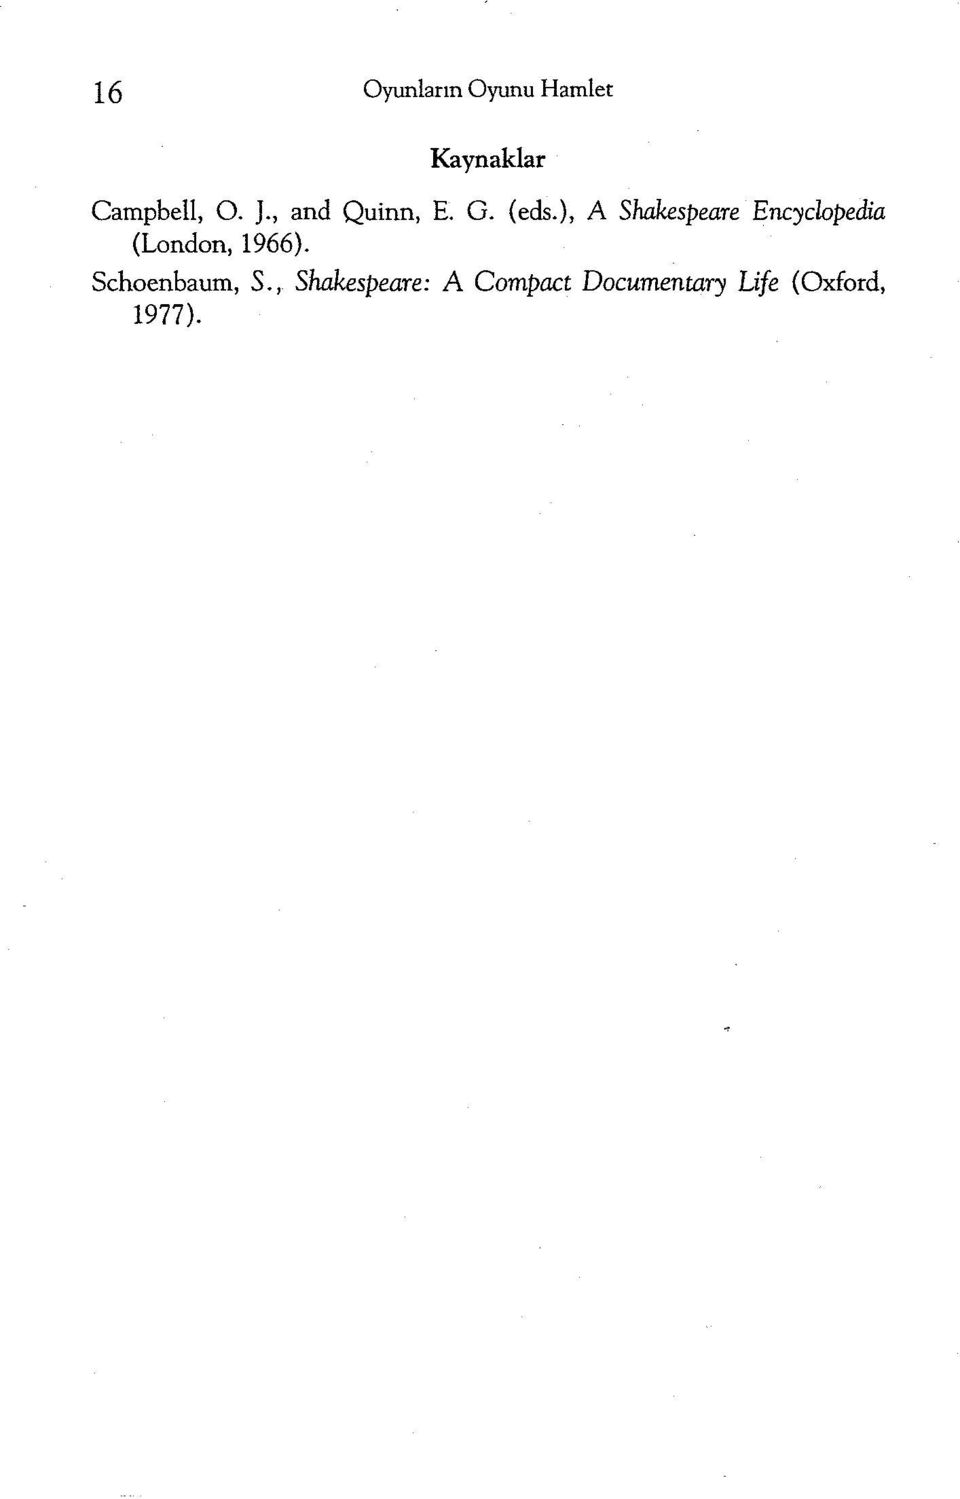 ), A Shakespeare Encyclopedia (London, 1966).